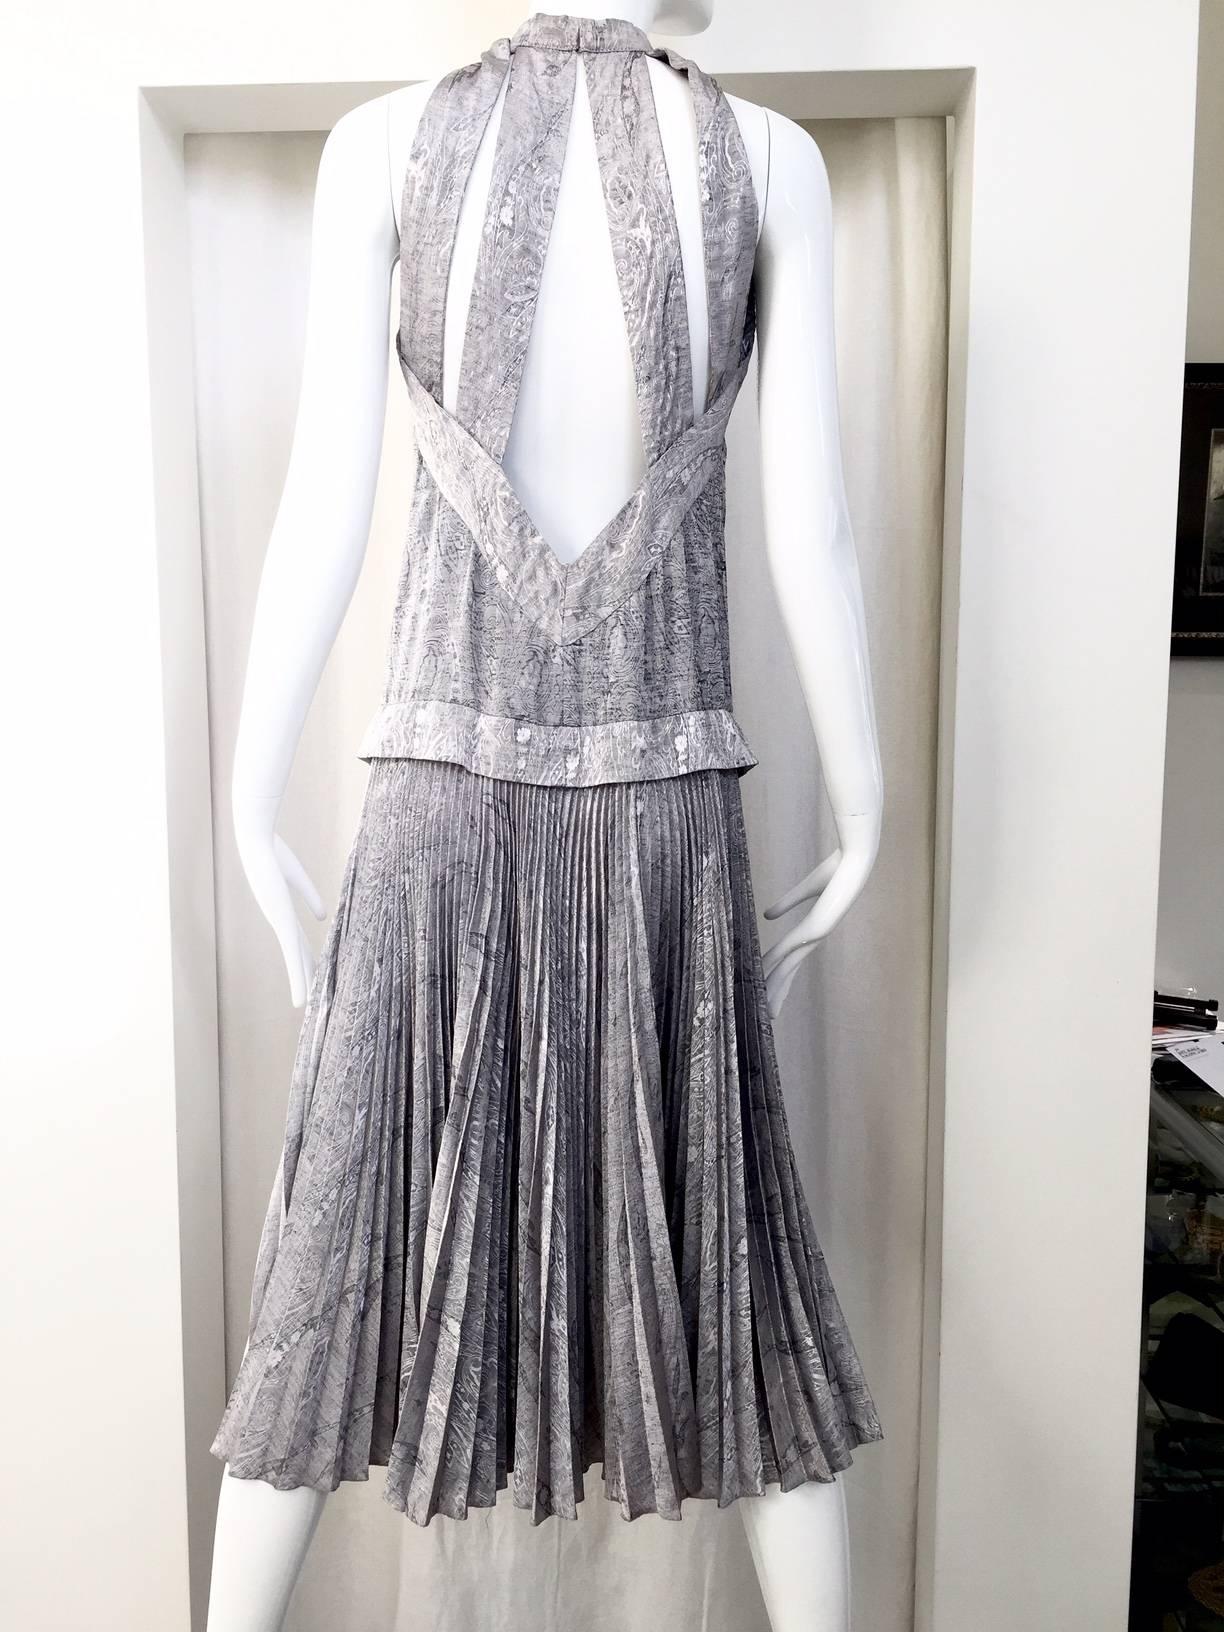 1970s Ted Lapidus grey silk plissè halter summer dress with panel at the back. 
drop waist style.
Bust: 34
Waist: 30"
small - medium